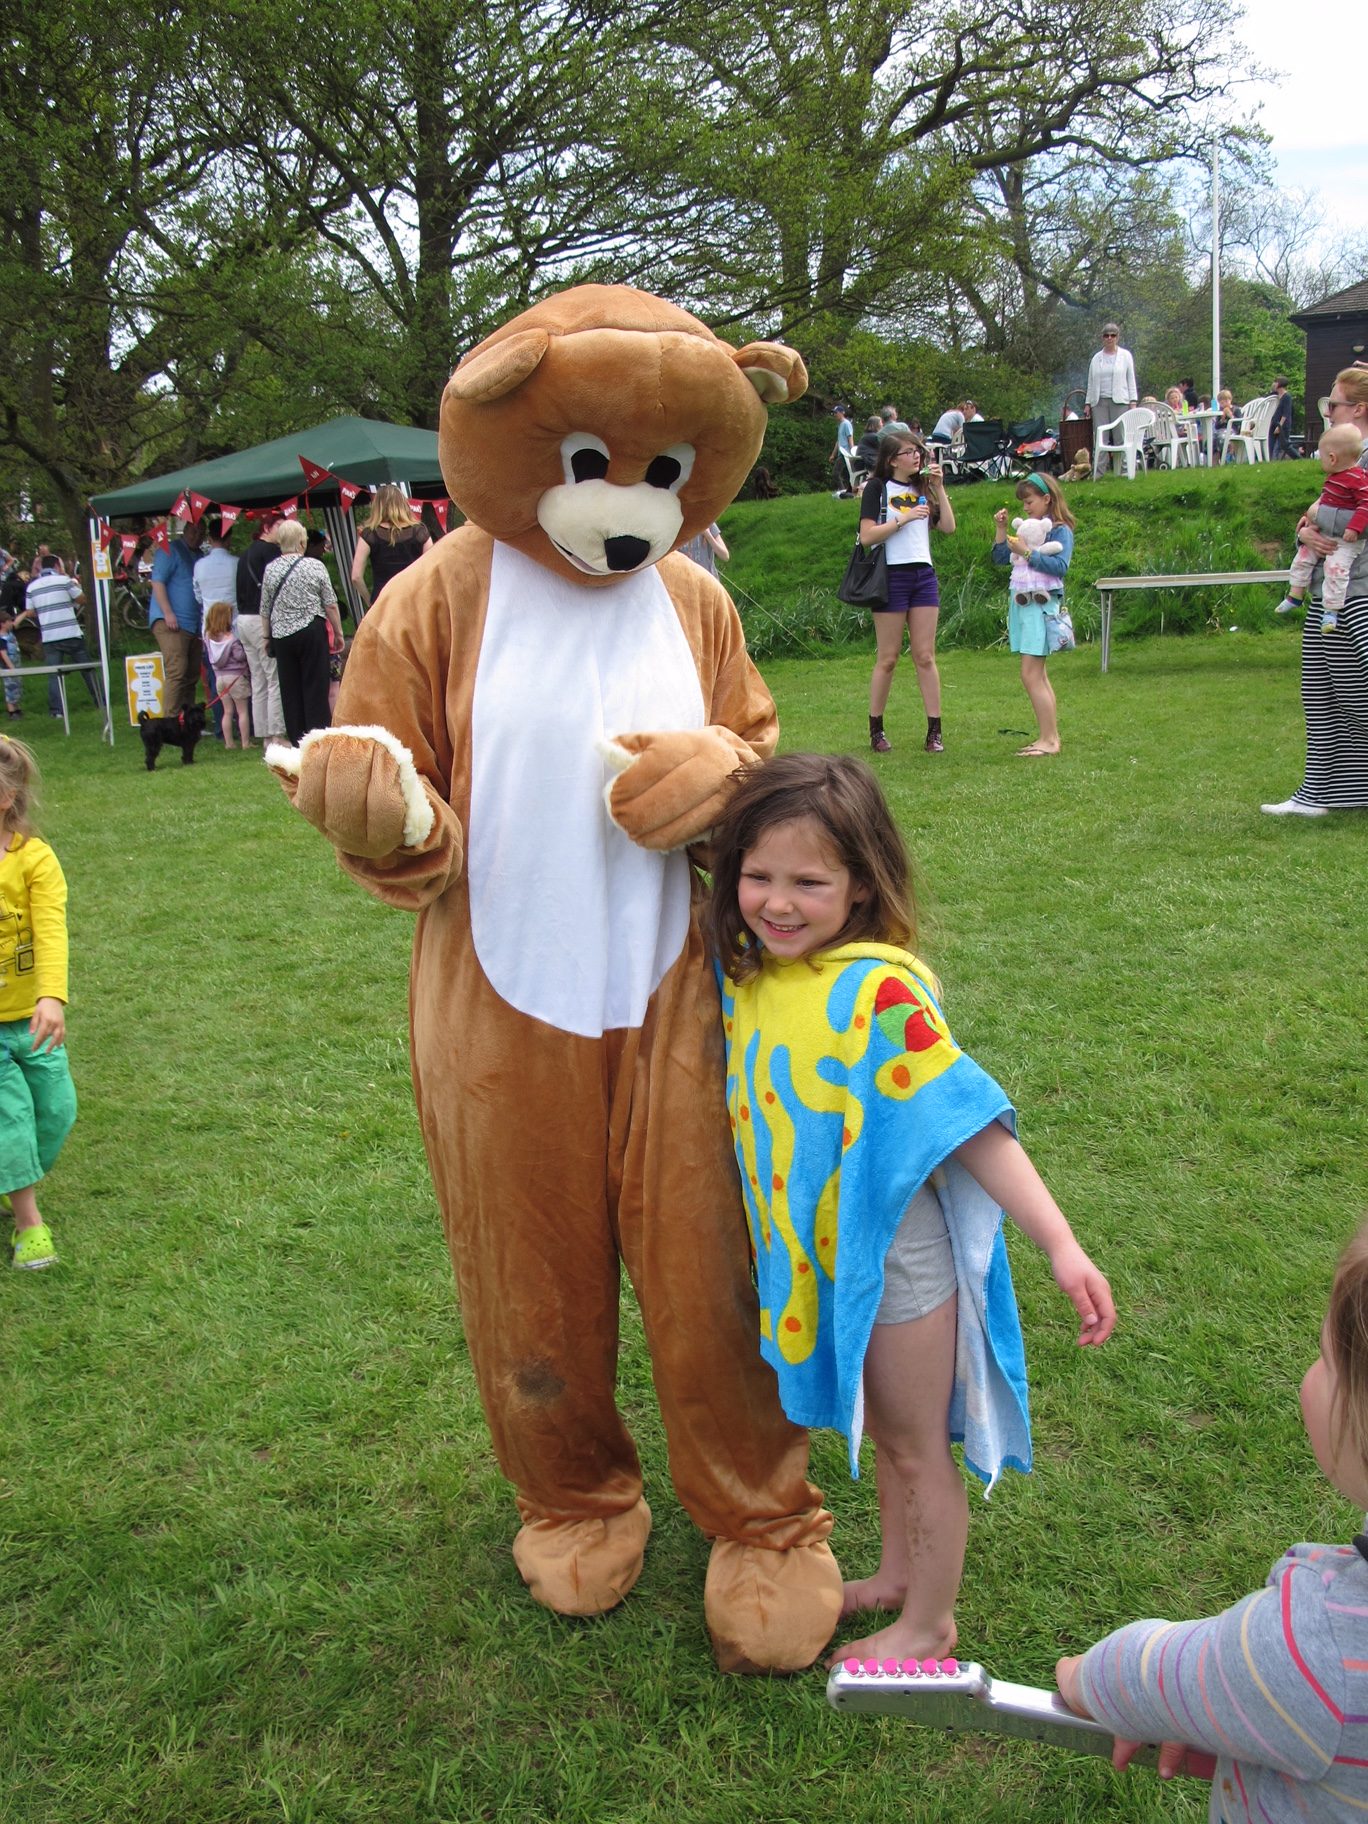 Bobby 2: Kyla at The Teddy Bears' Picnic.